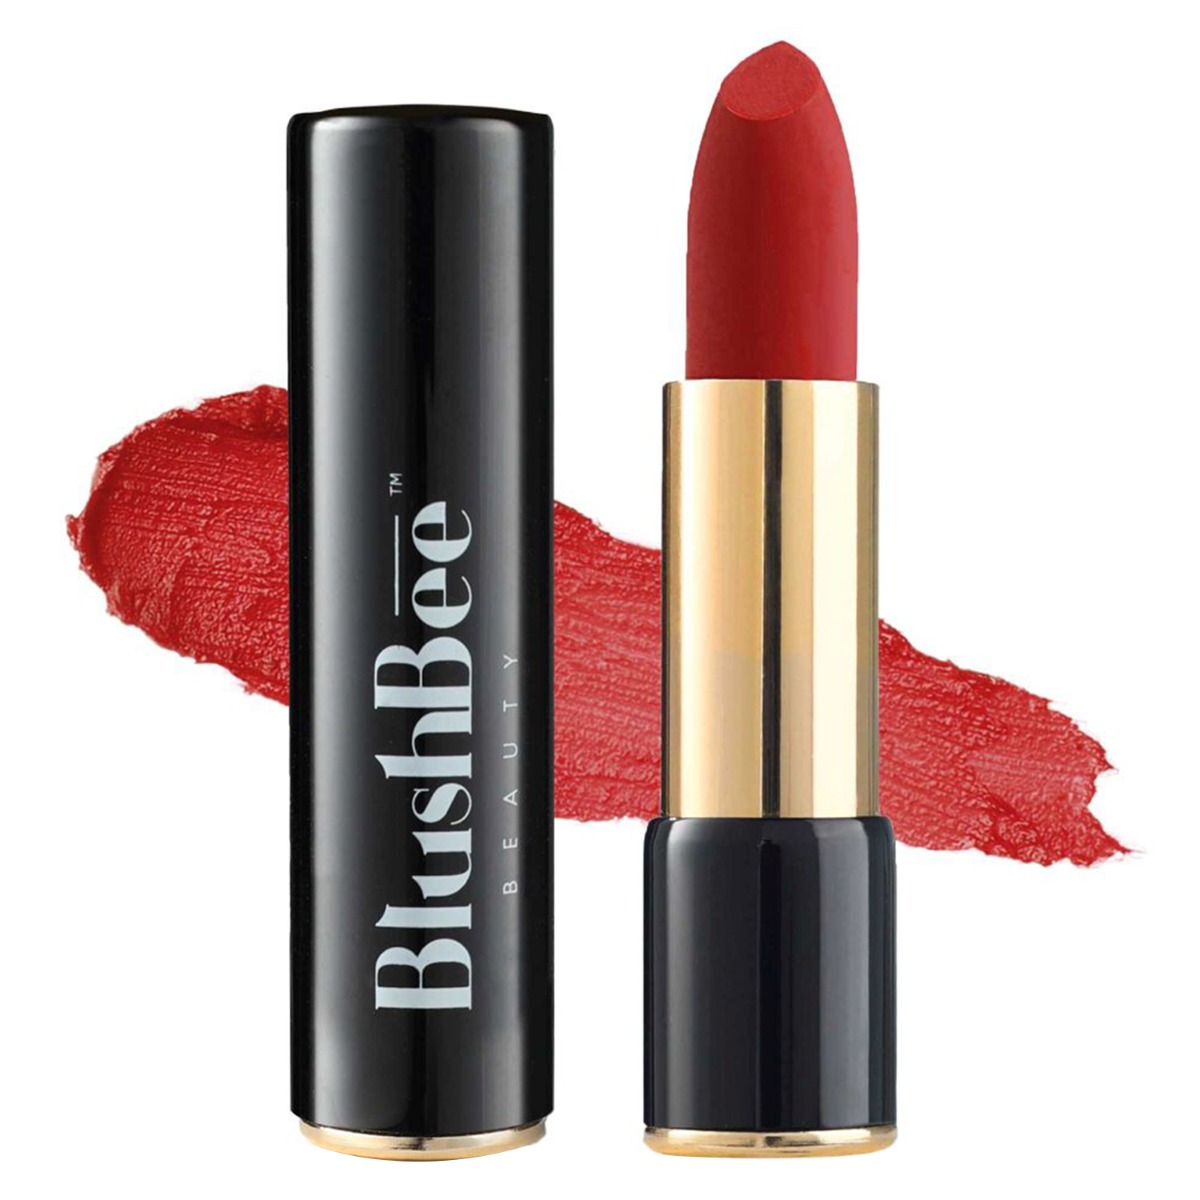 BlushBee Organic Beauty Lip Nourishing Organic Vegan Lipstick, 4.2gm-Party Red